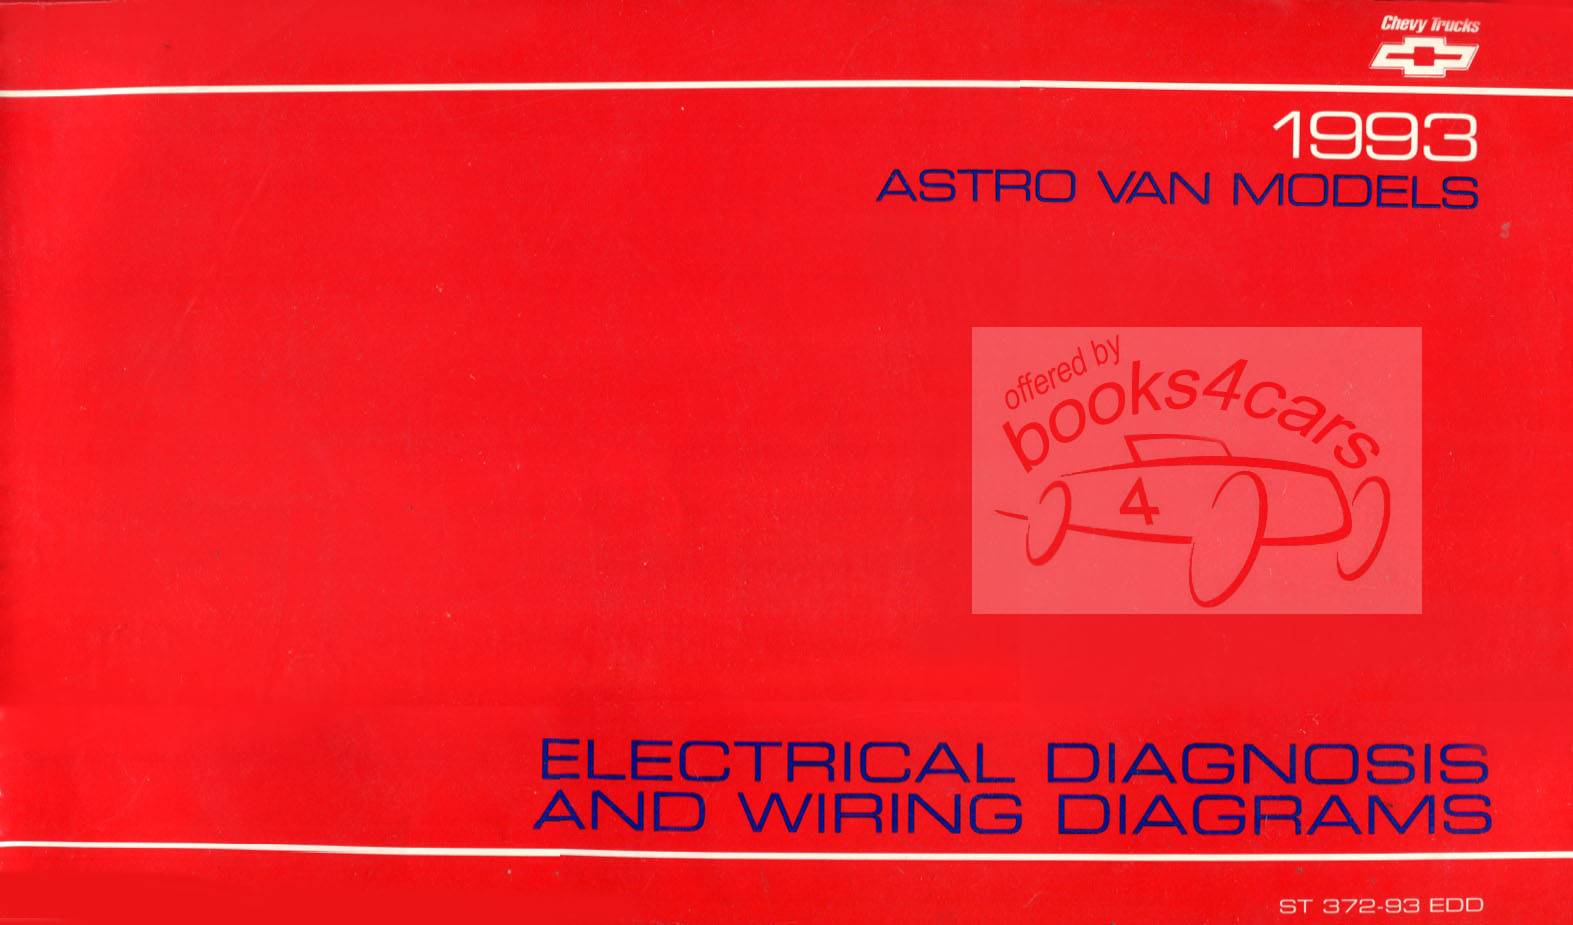 93 Astro Safari Van Electrical Diagnosis Wiring diagrams by Chevrolet GMC Truck 11x17 inch format